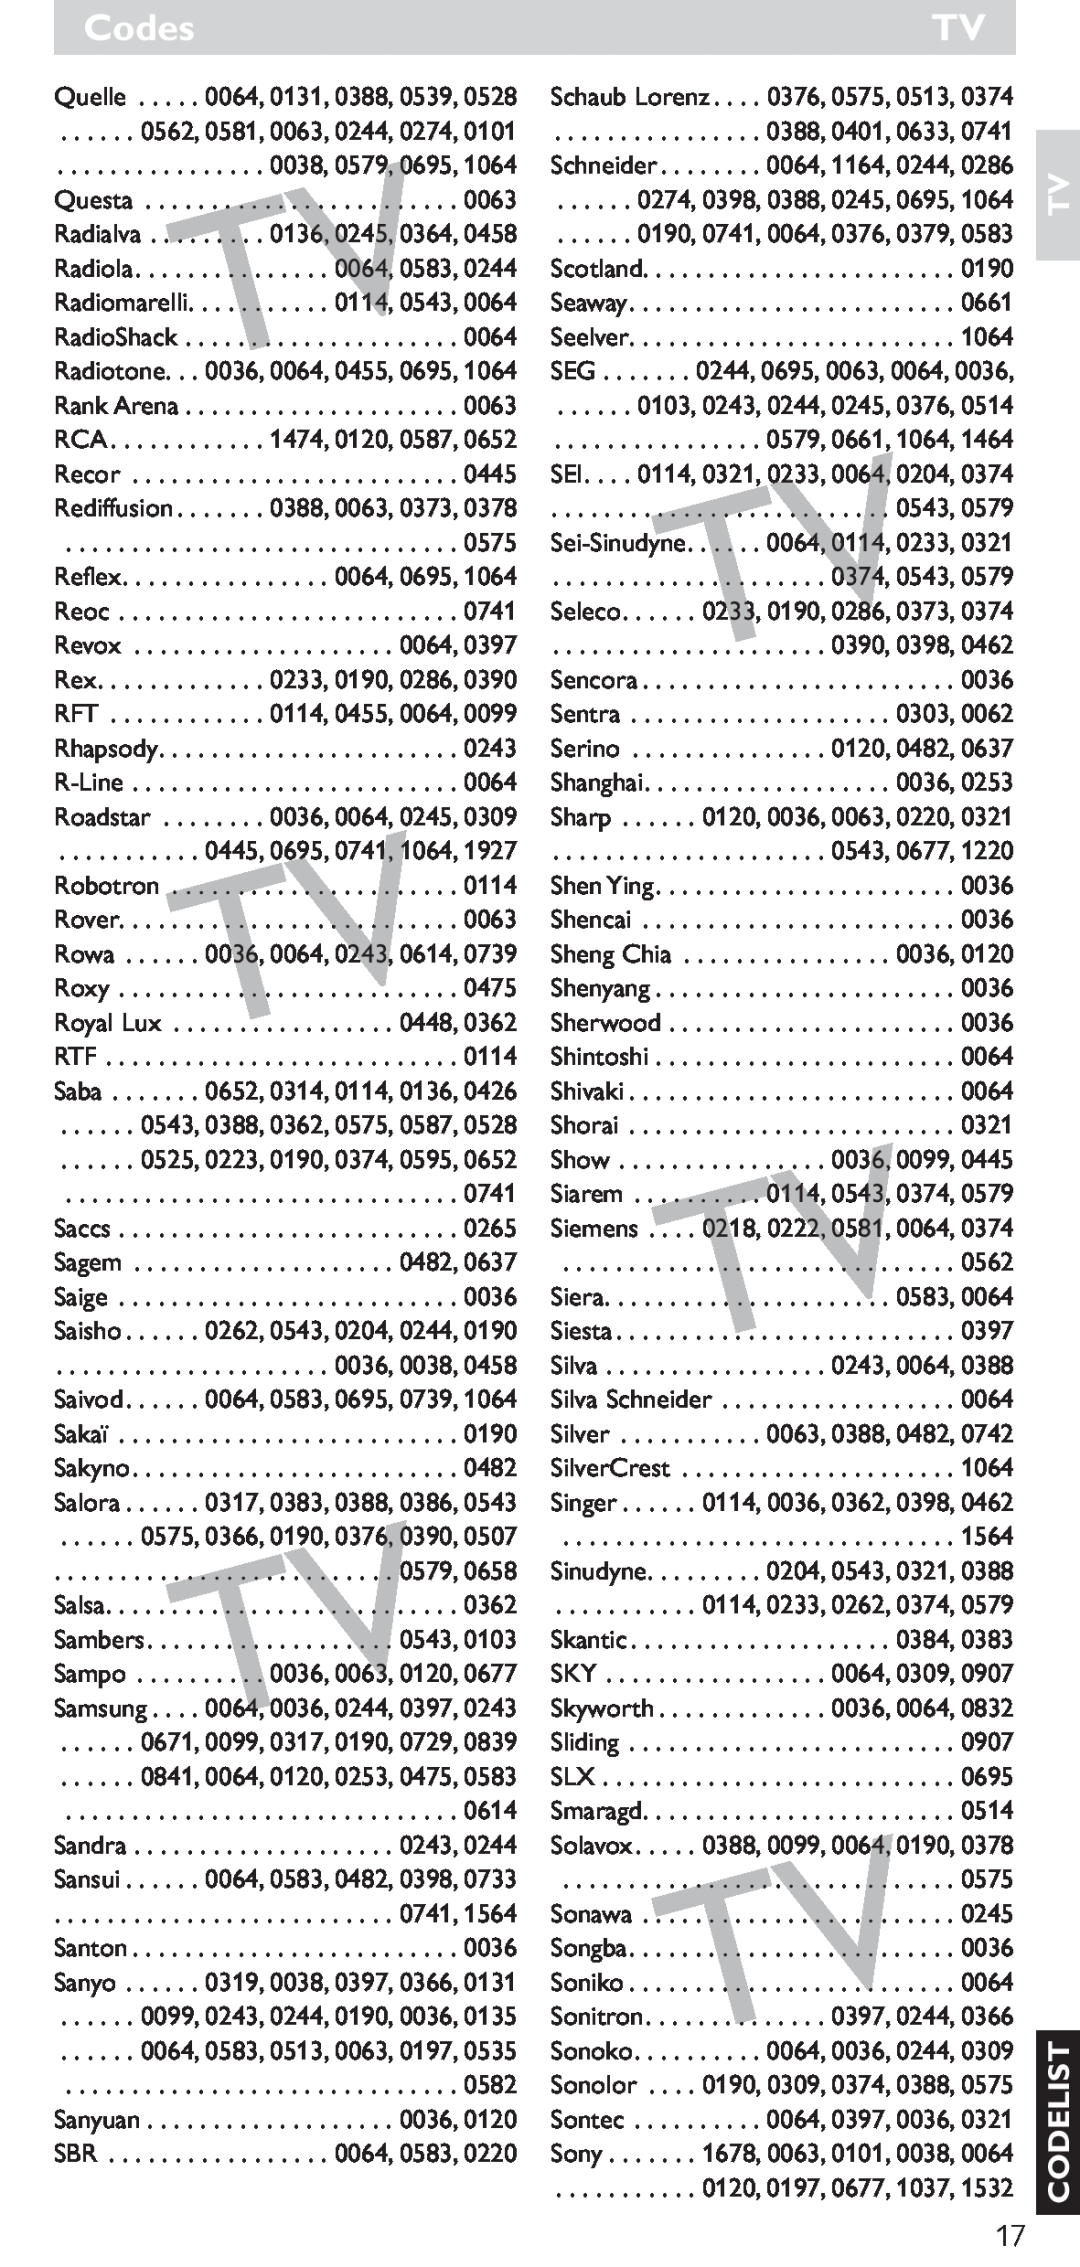 Hitachi SRU 5040/05 manual Codes, Tv Codelist, Royal LuxTV. . . . . . . . . . . . . . . . . 0448 